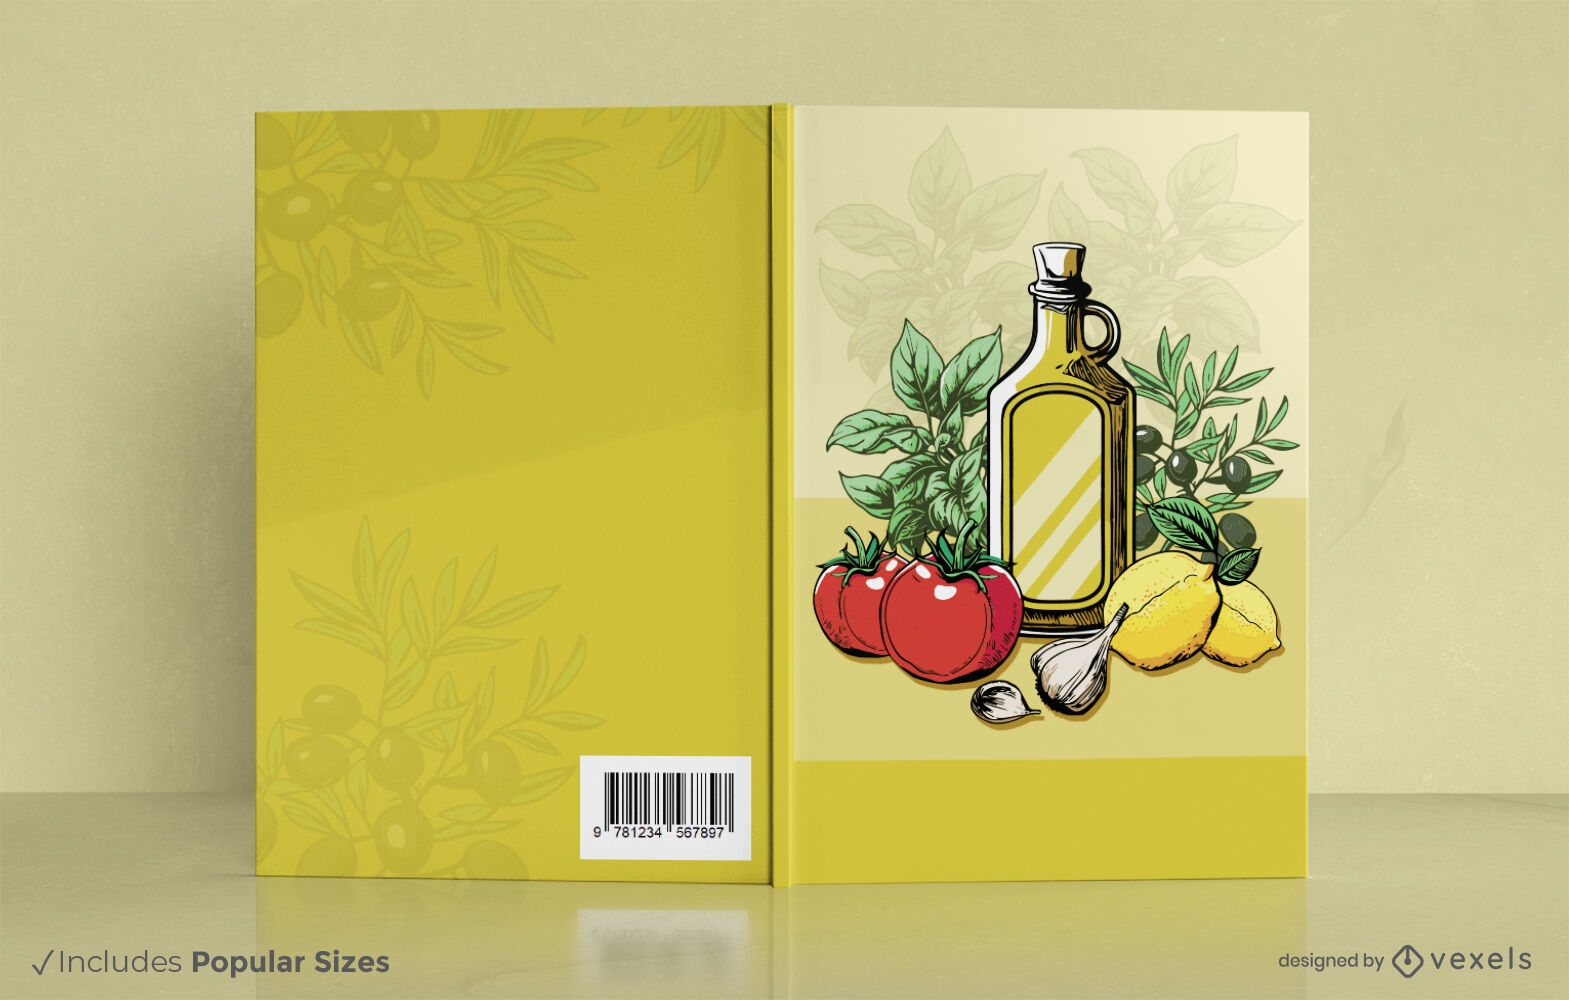 Italian cooking ingredientes book cover design